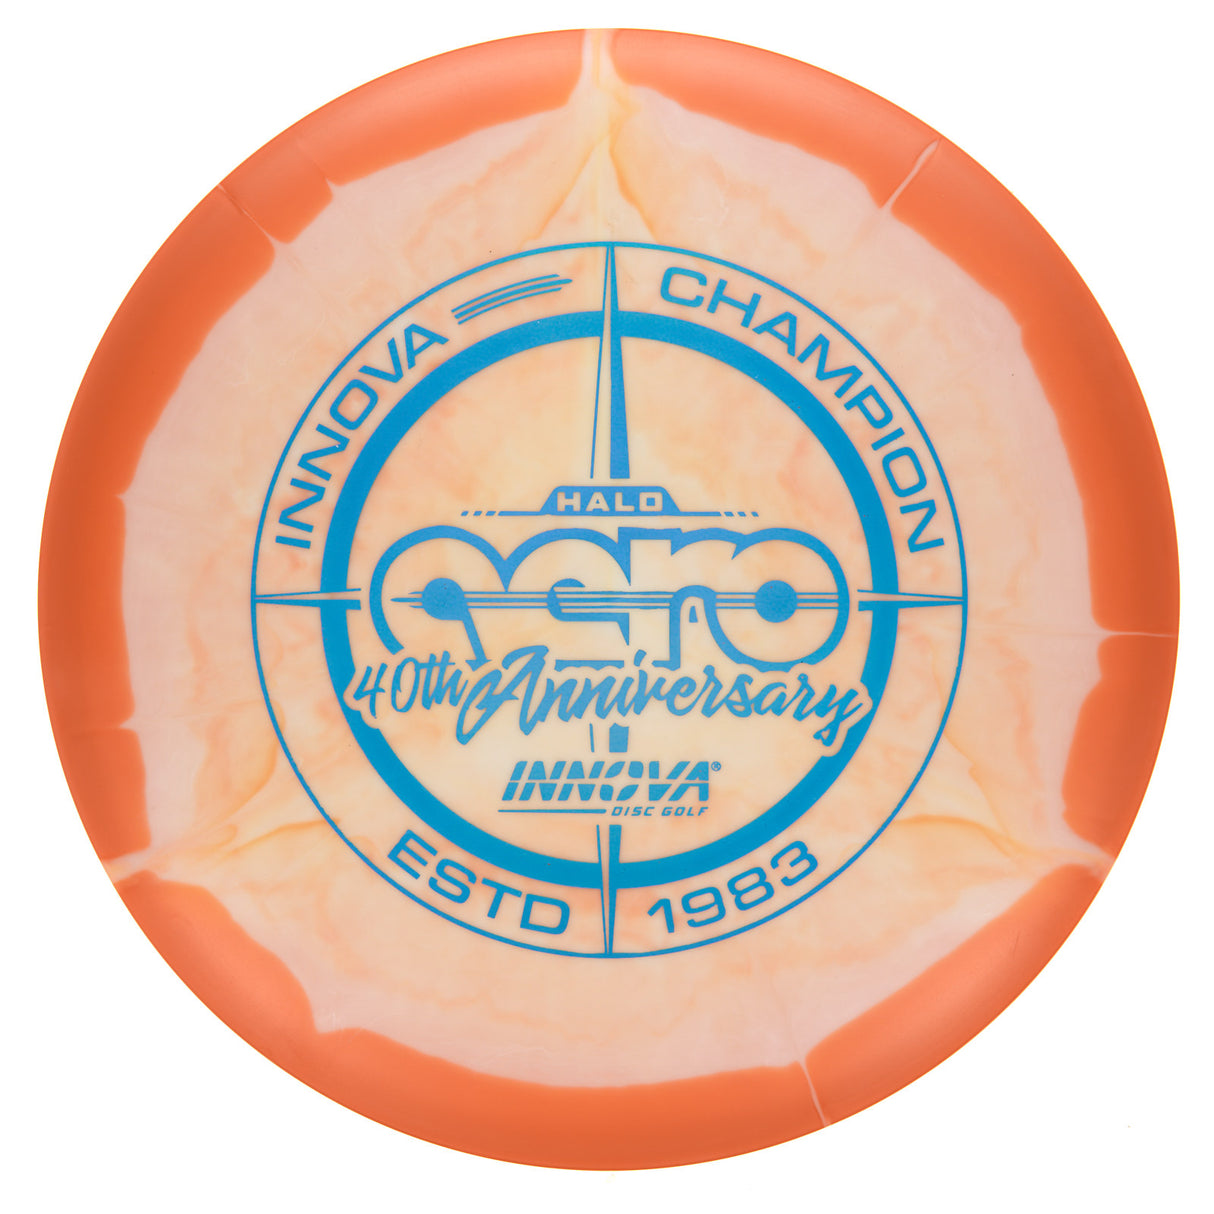 Innova Aero - 40th Anniversary Stamp Halo Star 182g | Style 0010